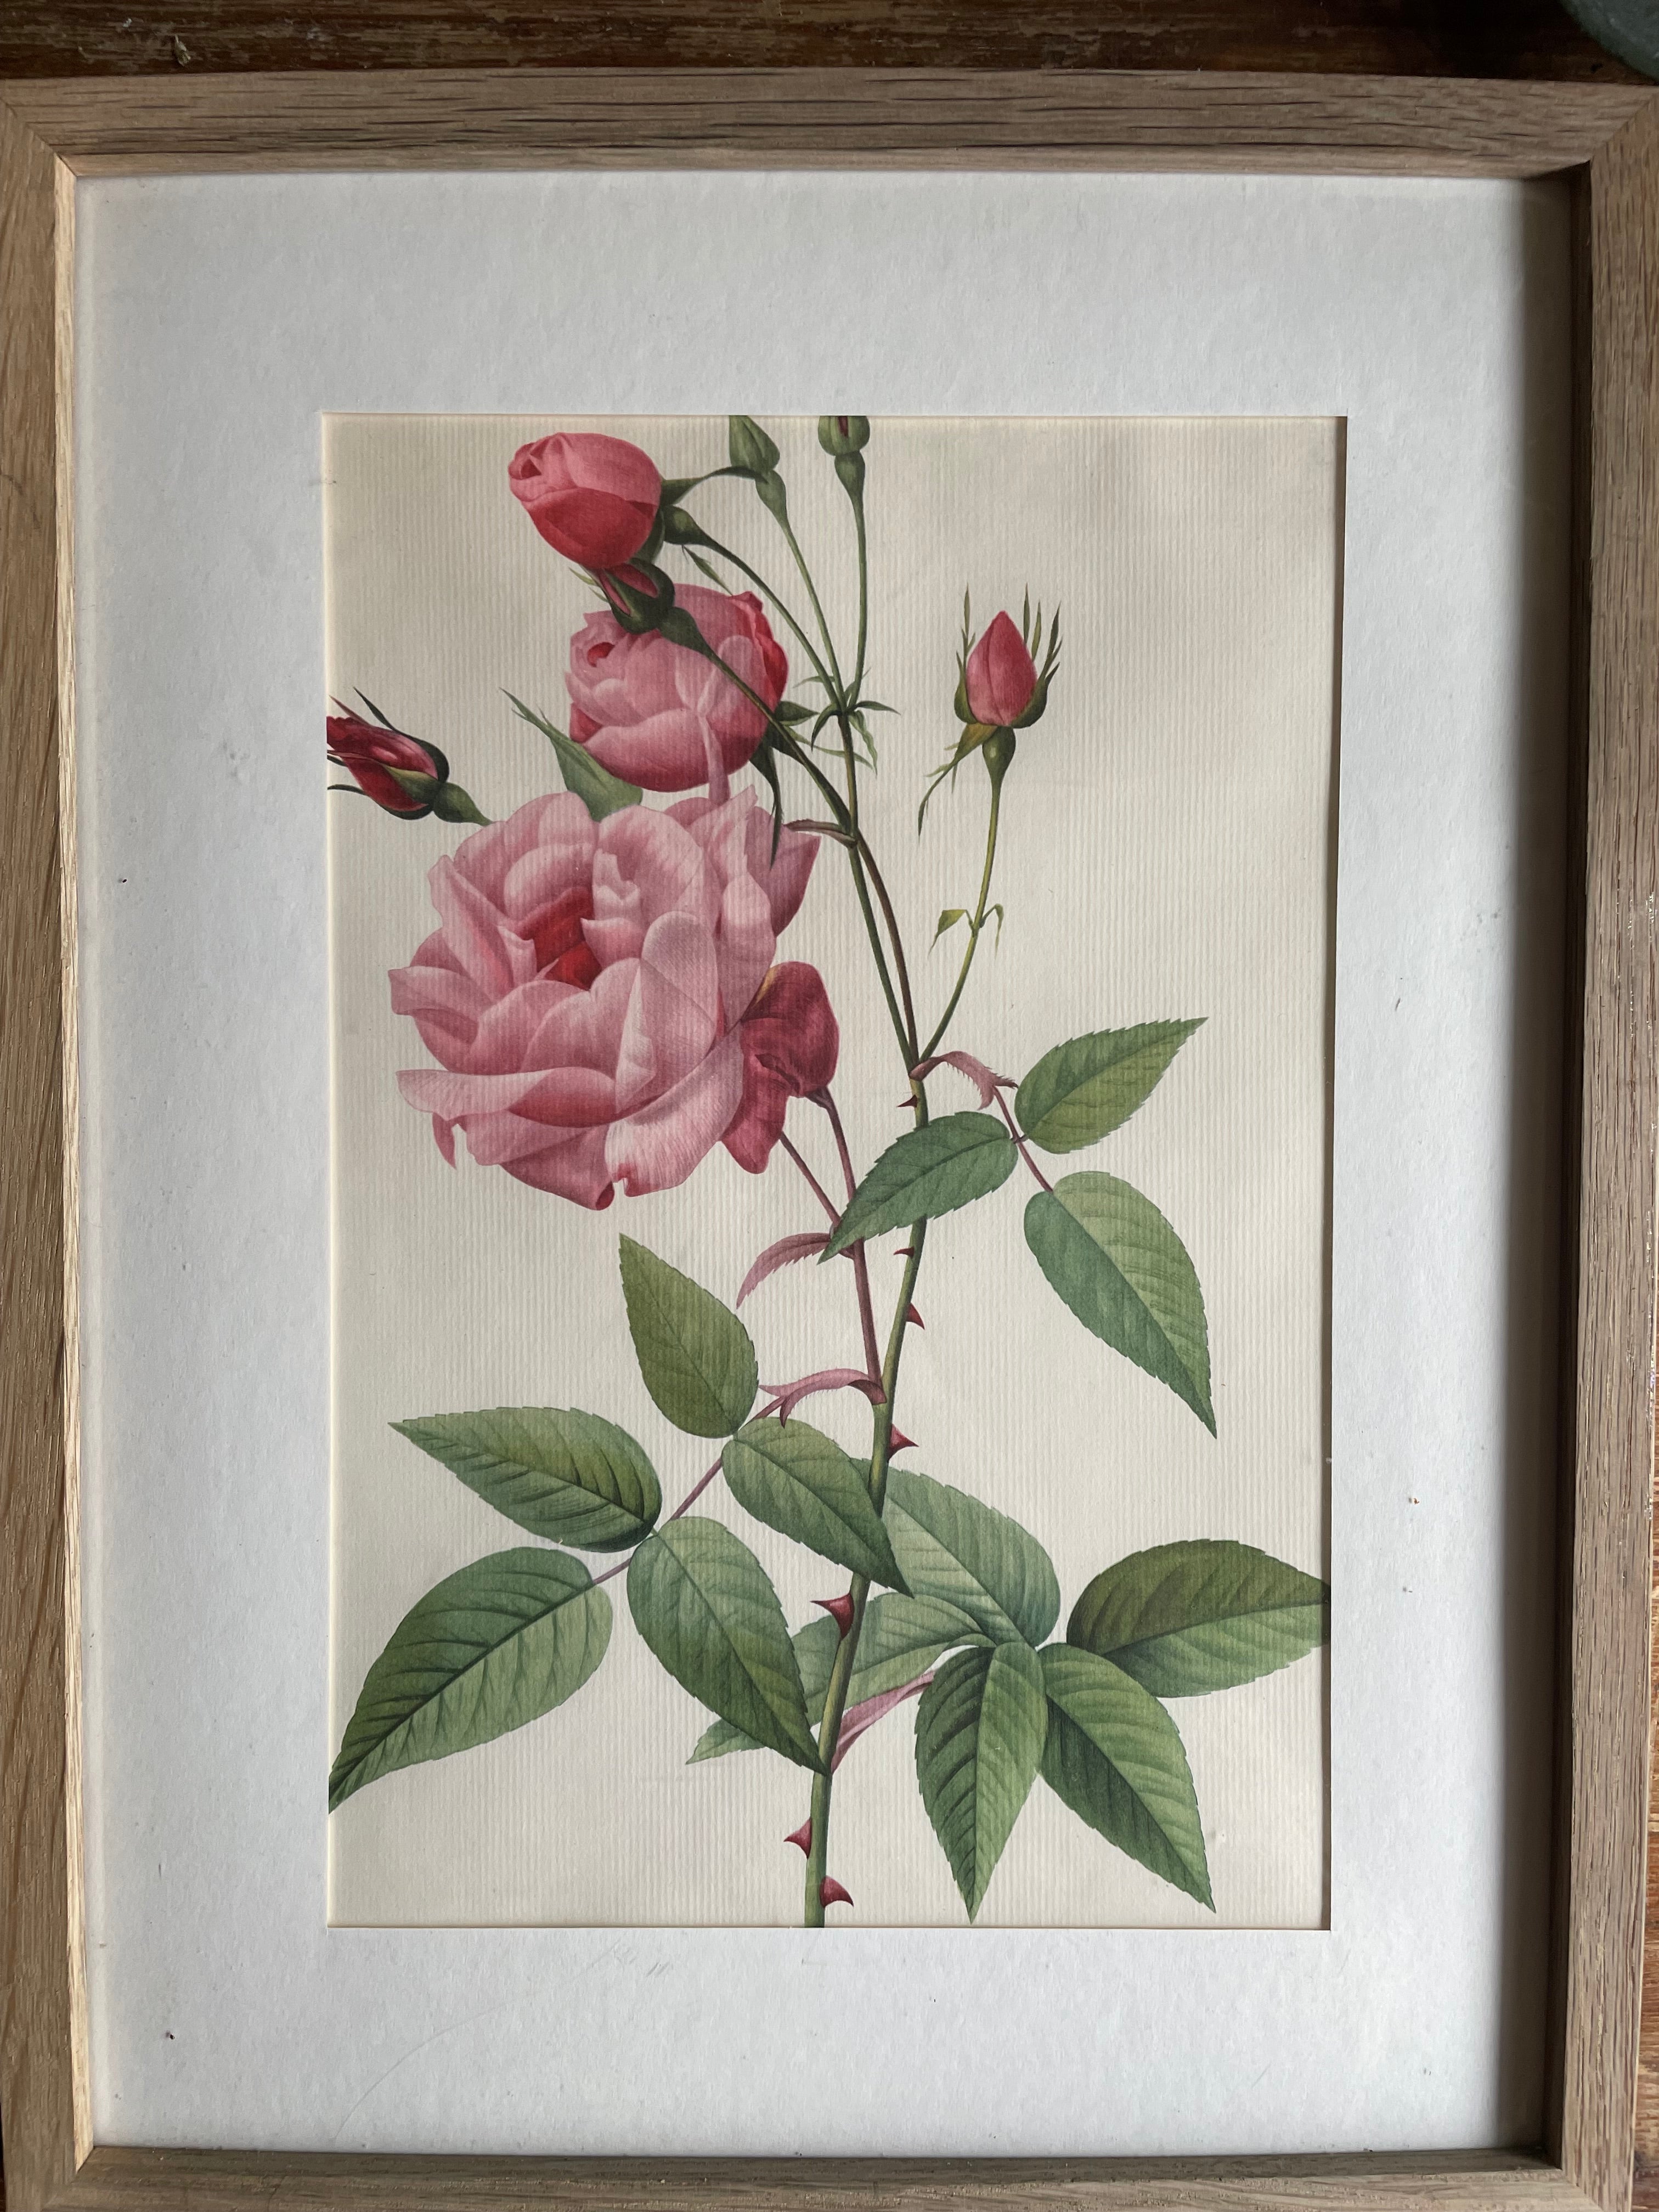 Framed 19th Century Botanical Illustration of Roses